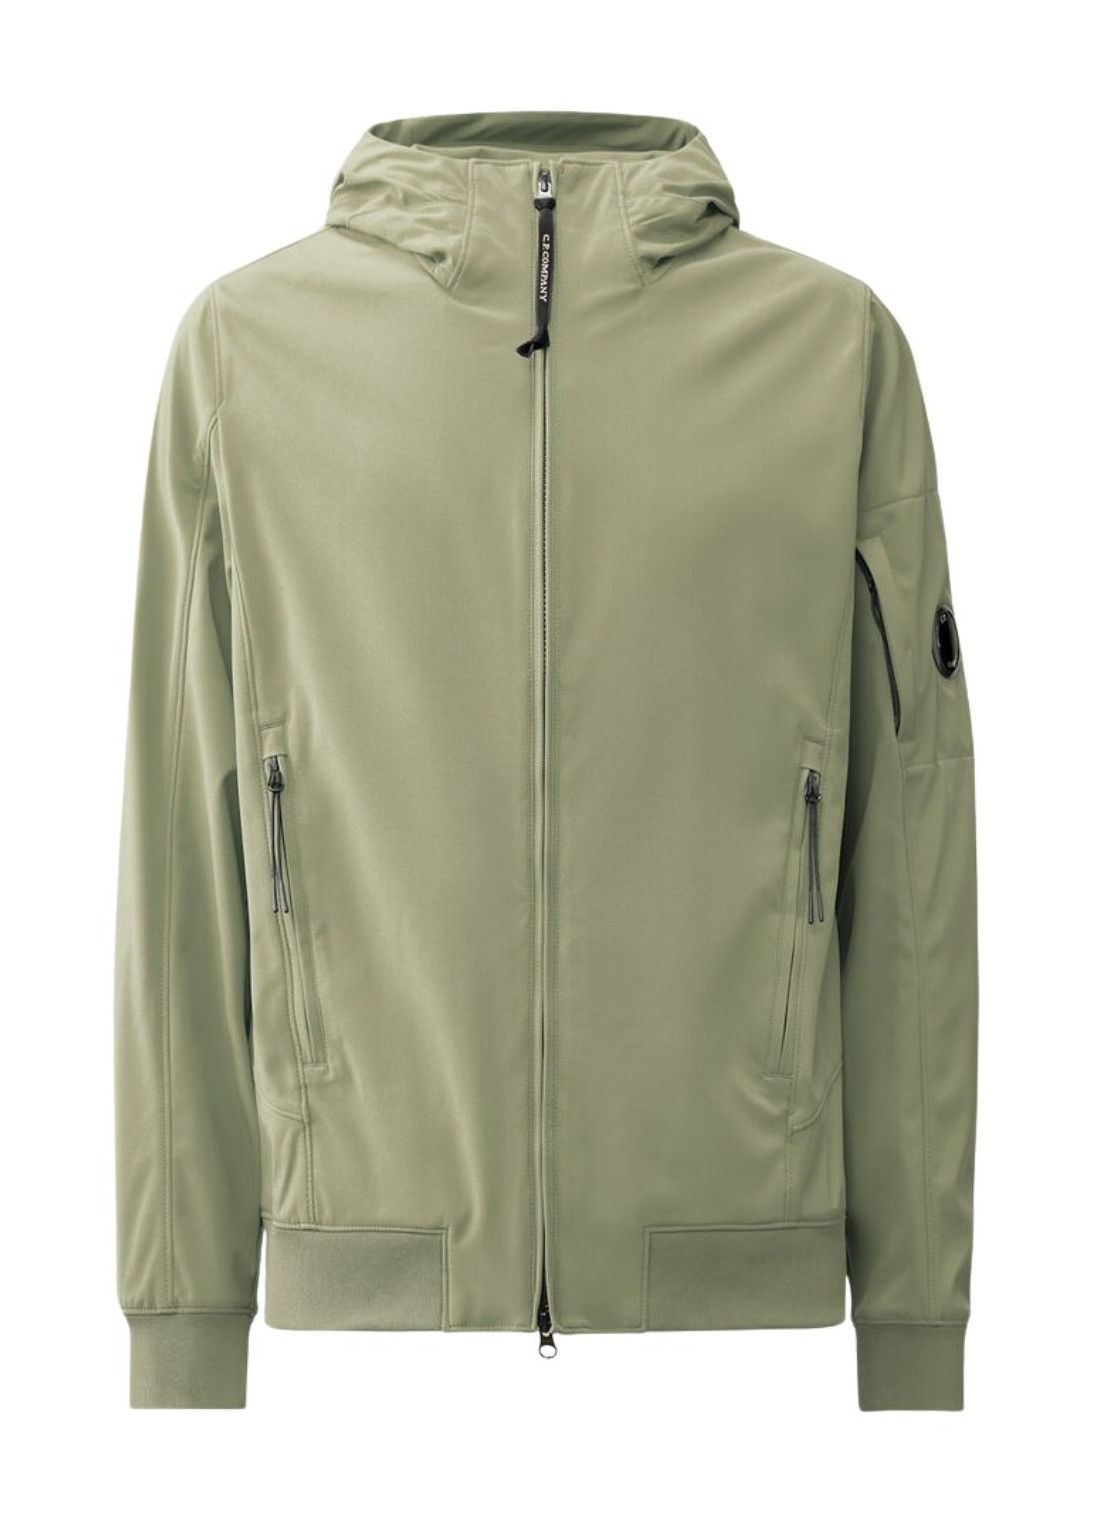 Outerwear c.p.company outerwear man c.p. shell-r jacket 16cmow003a005968a 627 talla verde
 